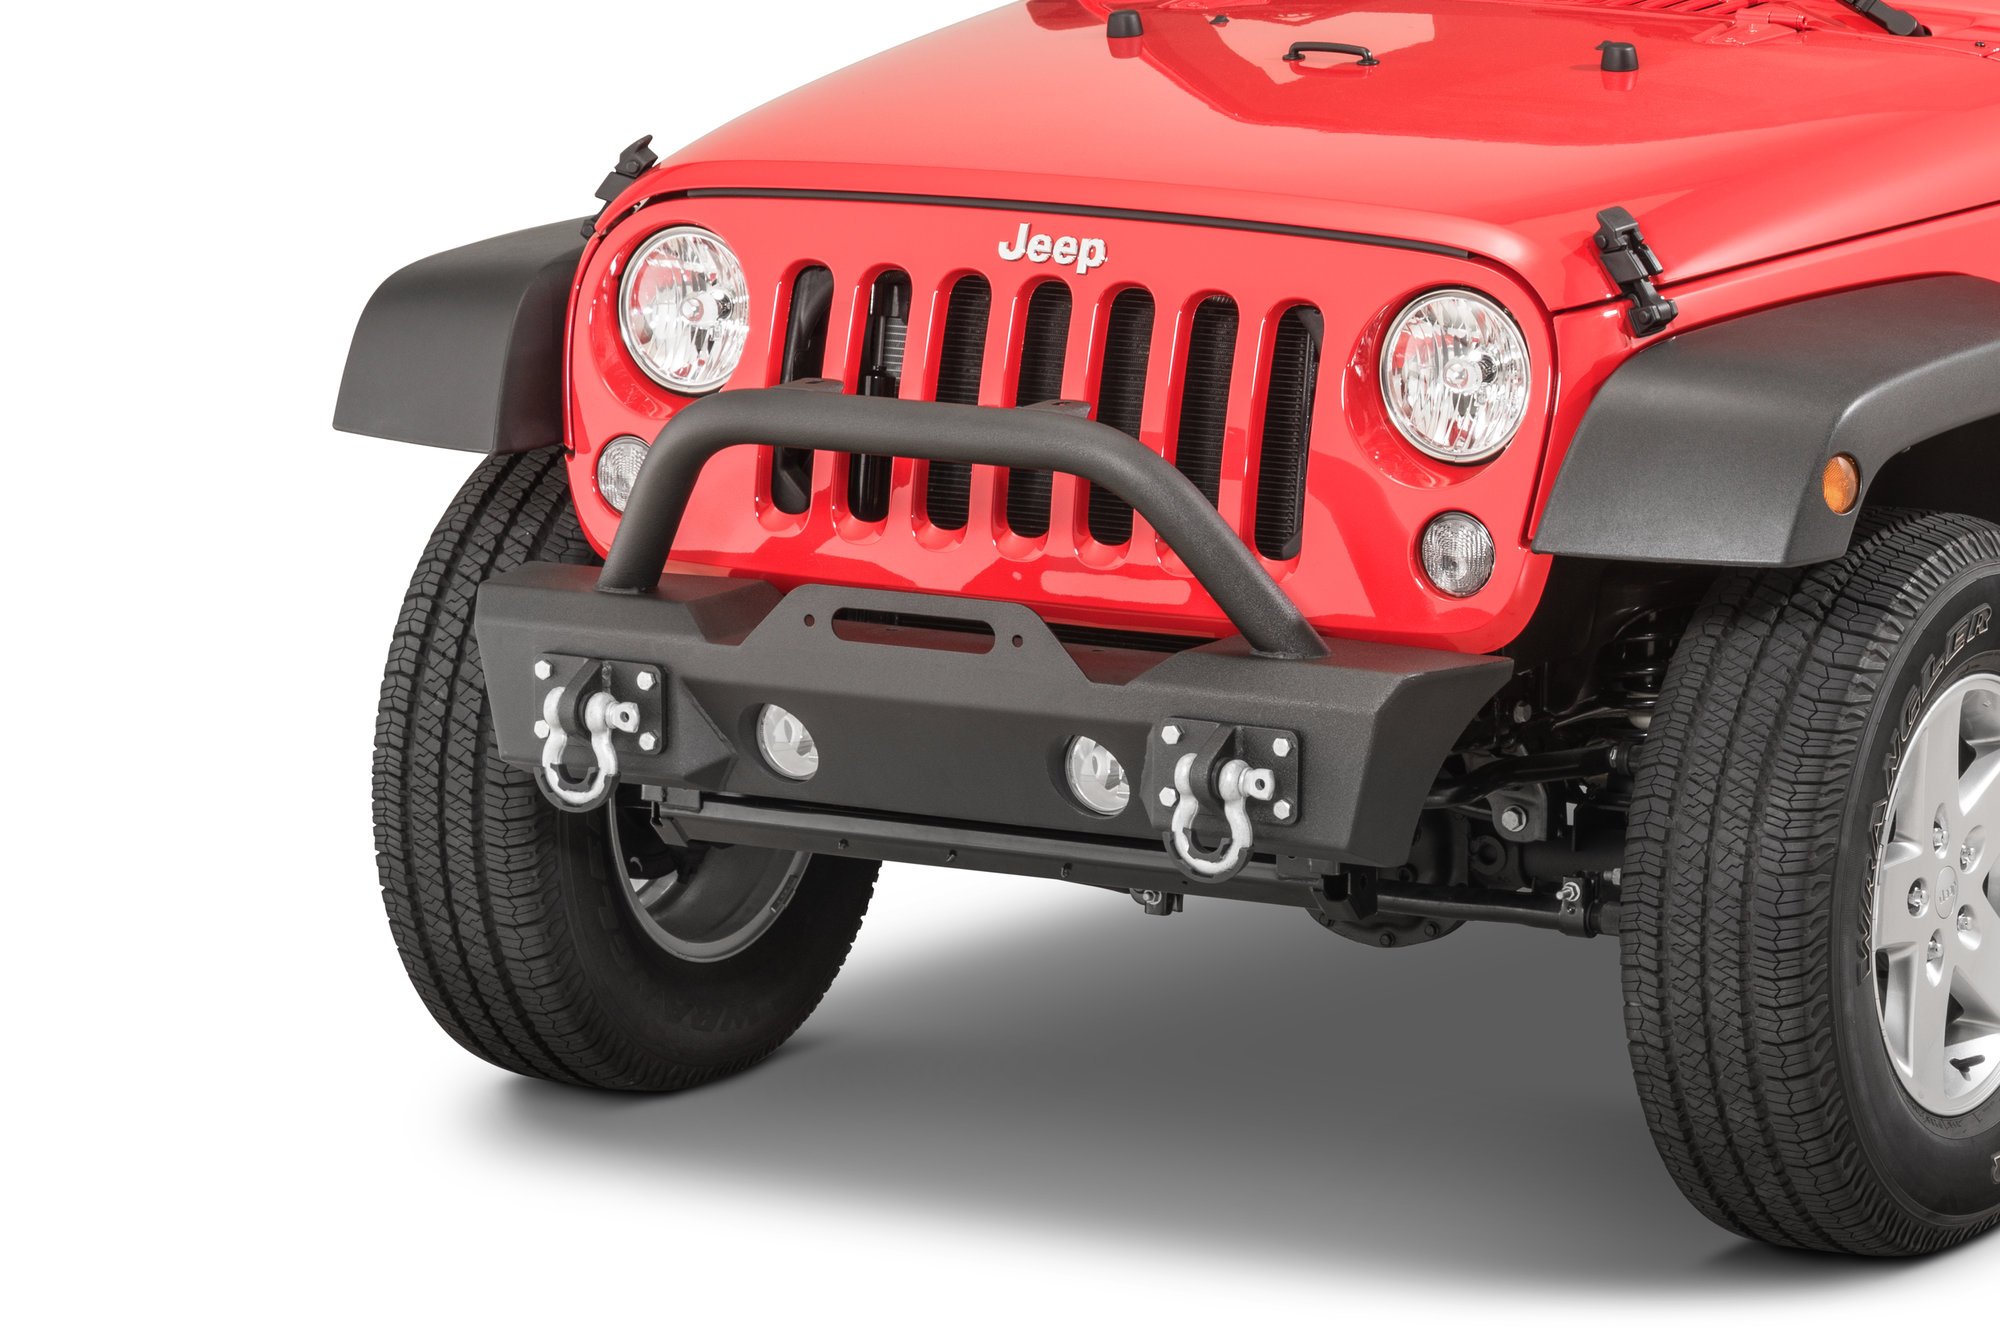 Arriba 79+ imagen jeep wrangler jk stubby front bumper